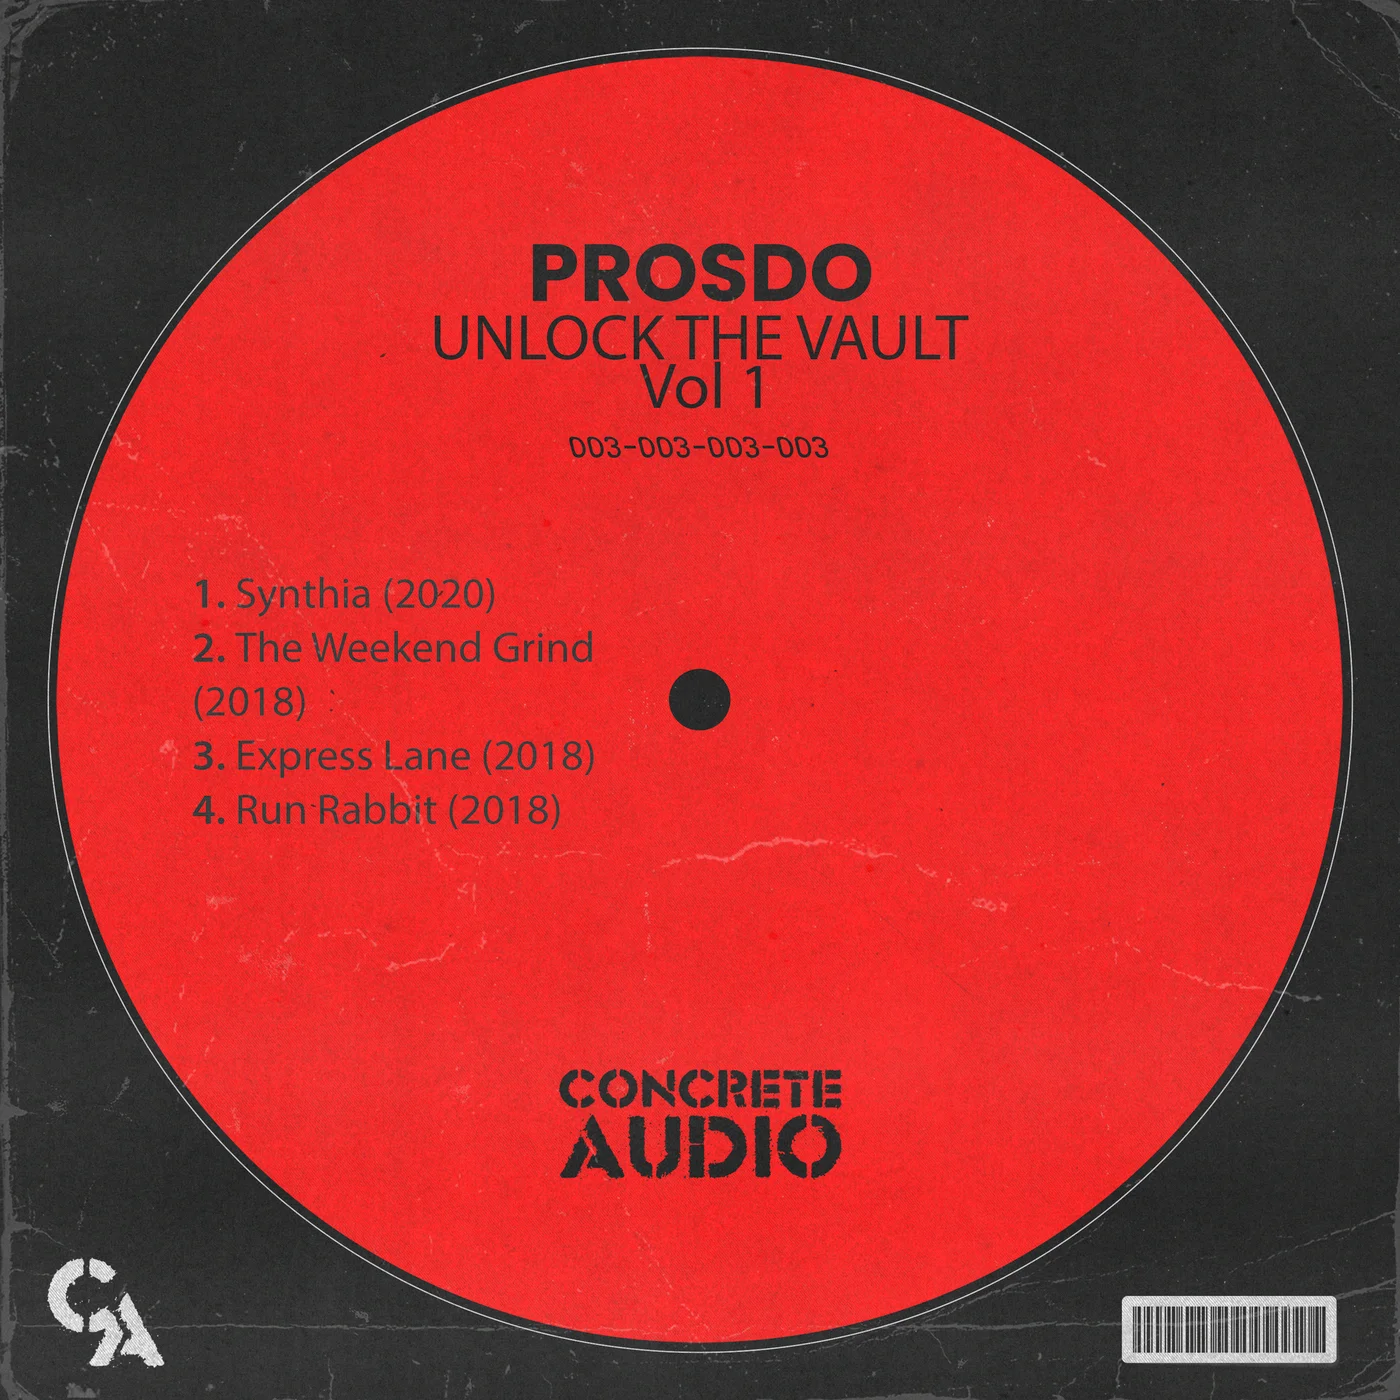 Prosdo unlocks his vault to present your four forgotten tracks